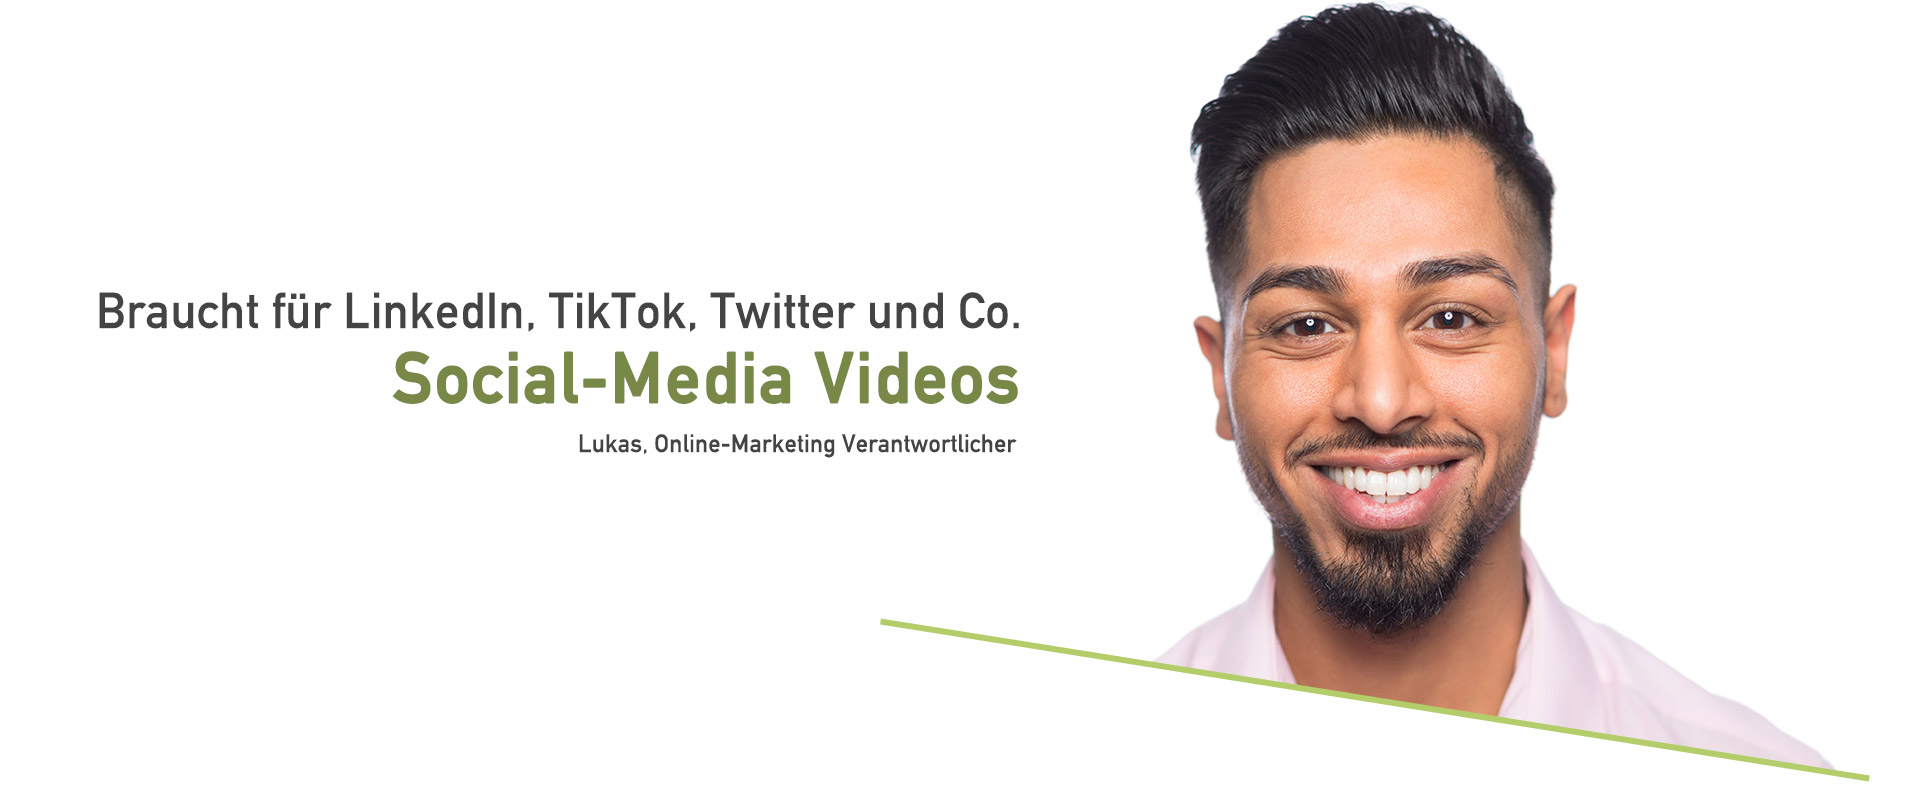 Social-Media Videos für LinkedIn, TikTok, Twitter und Co.